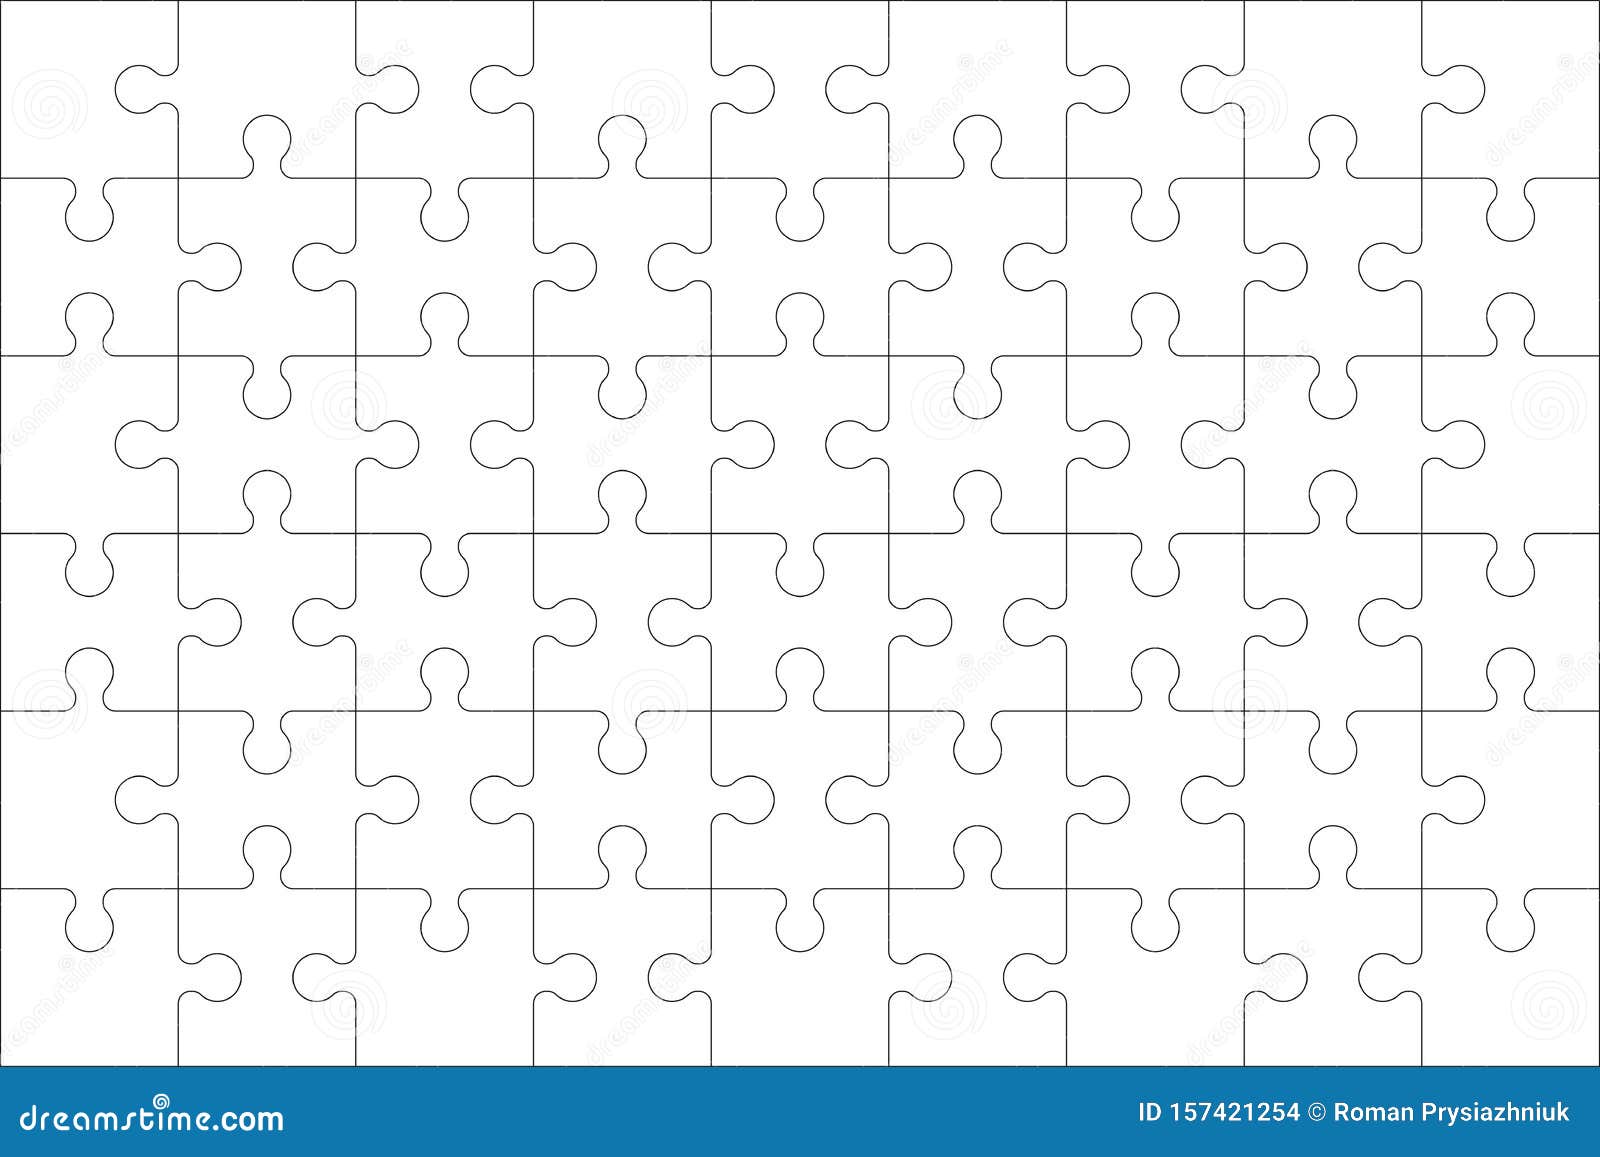 Blank Puzzle Pieces by Stocksy Contributor Bri Hammond - Stocksy